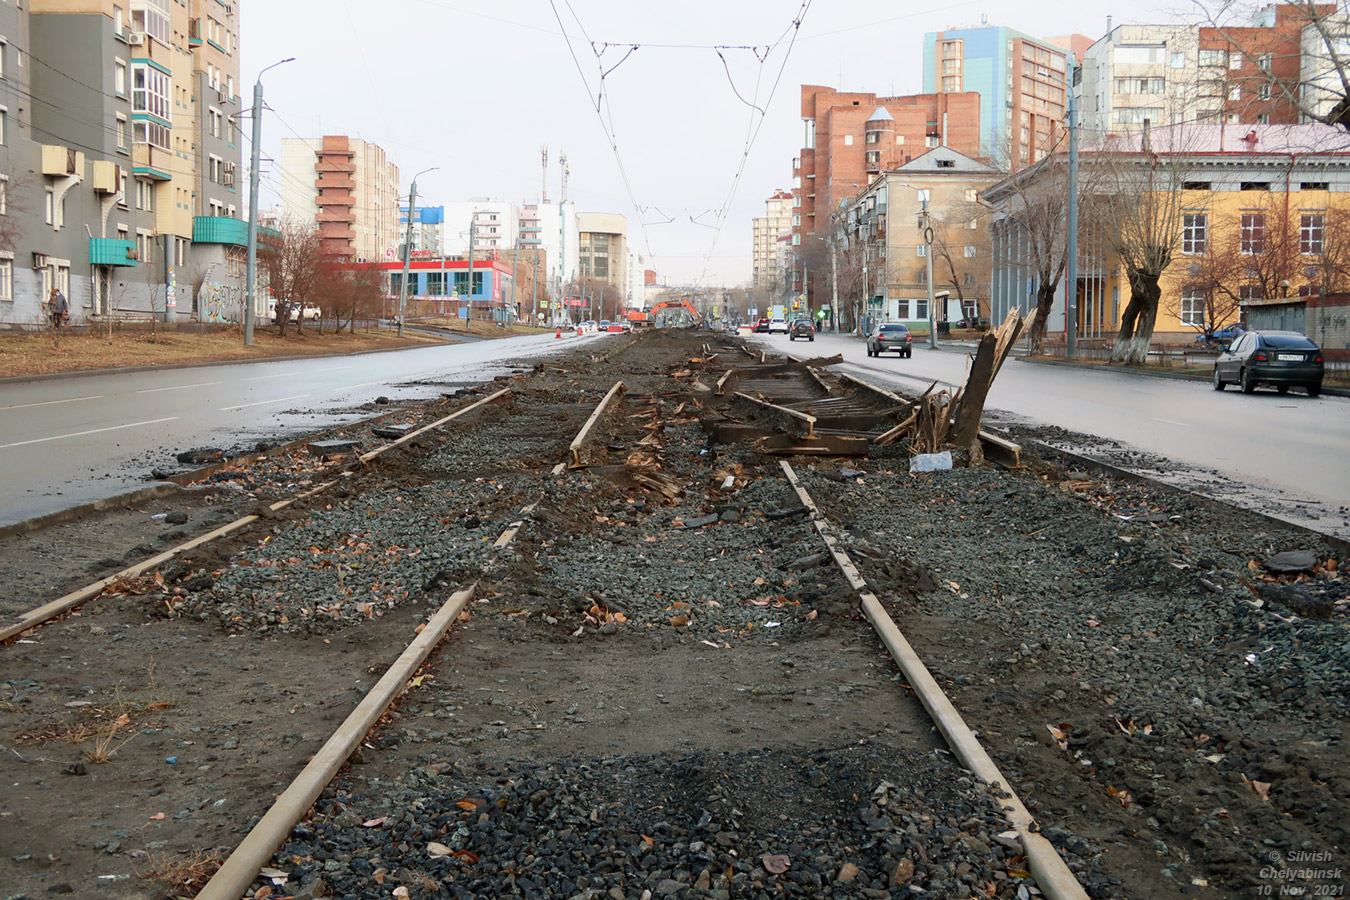 Tscheljabinsk — Reconstructions